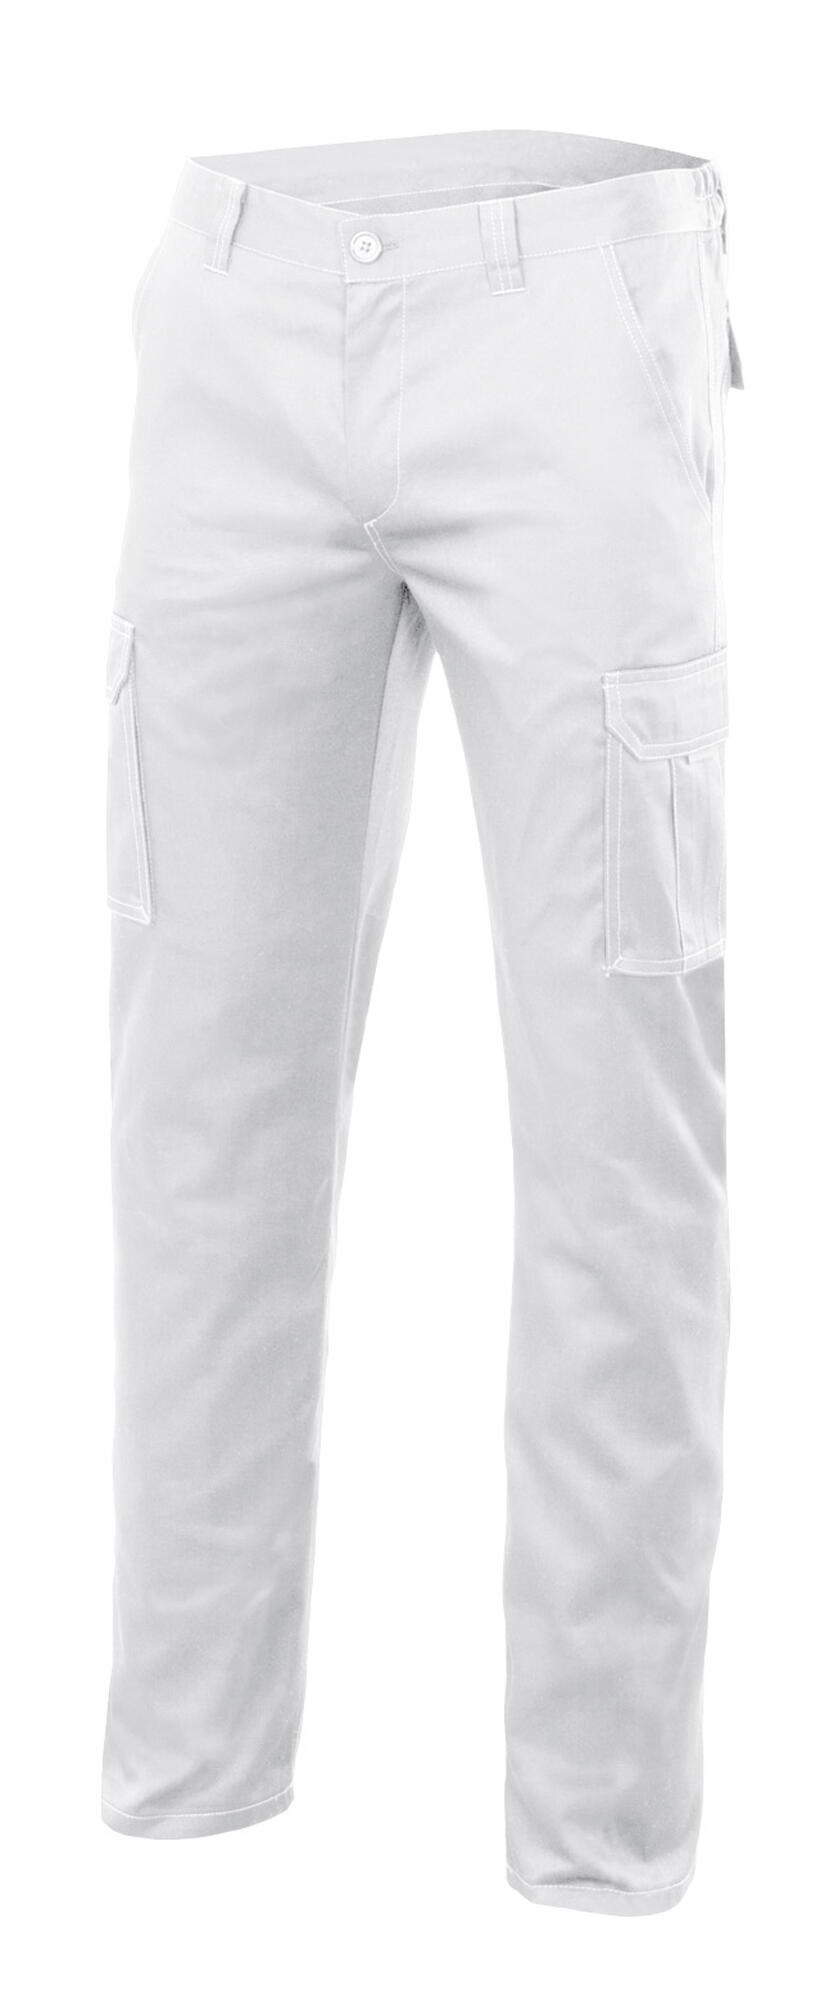 Pantalon de trabajo multibolsillo stretch blanco t54